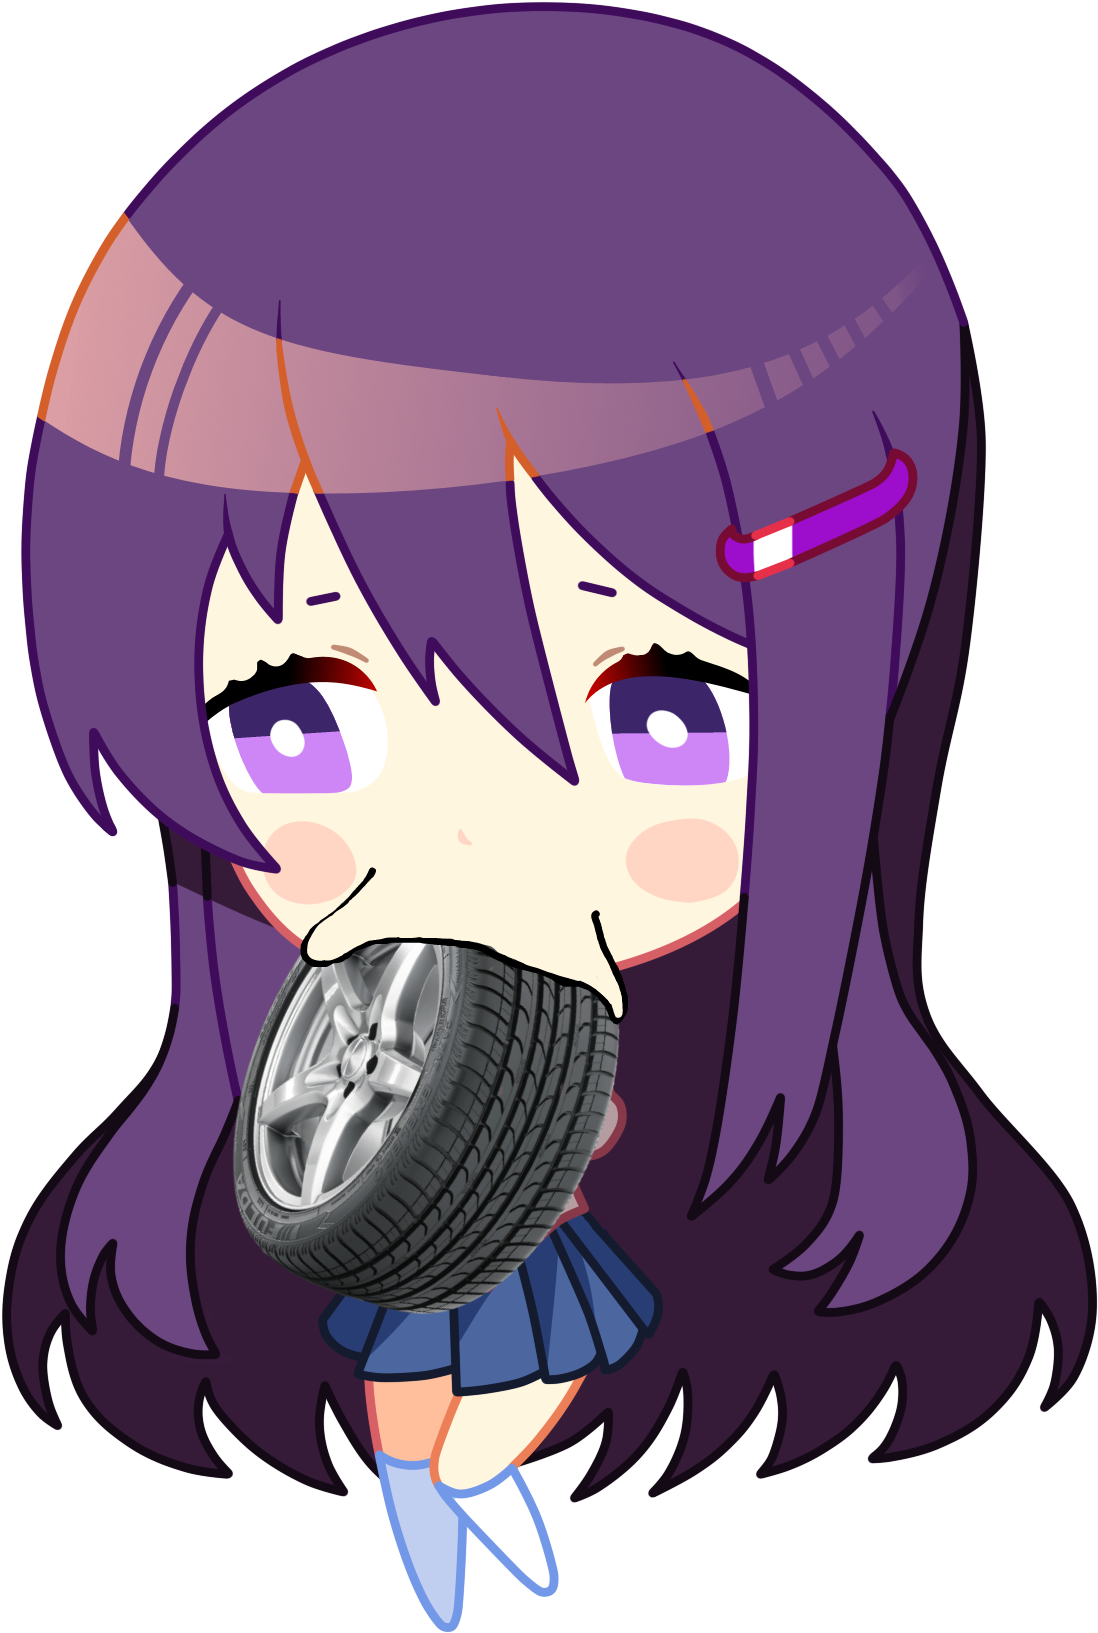 Cartoon Girl With Purple Hair Holding A Tire